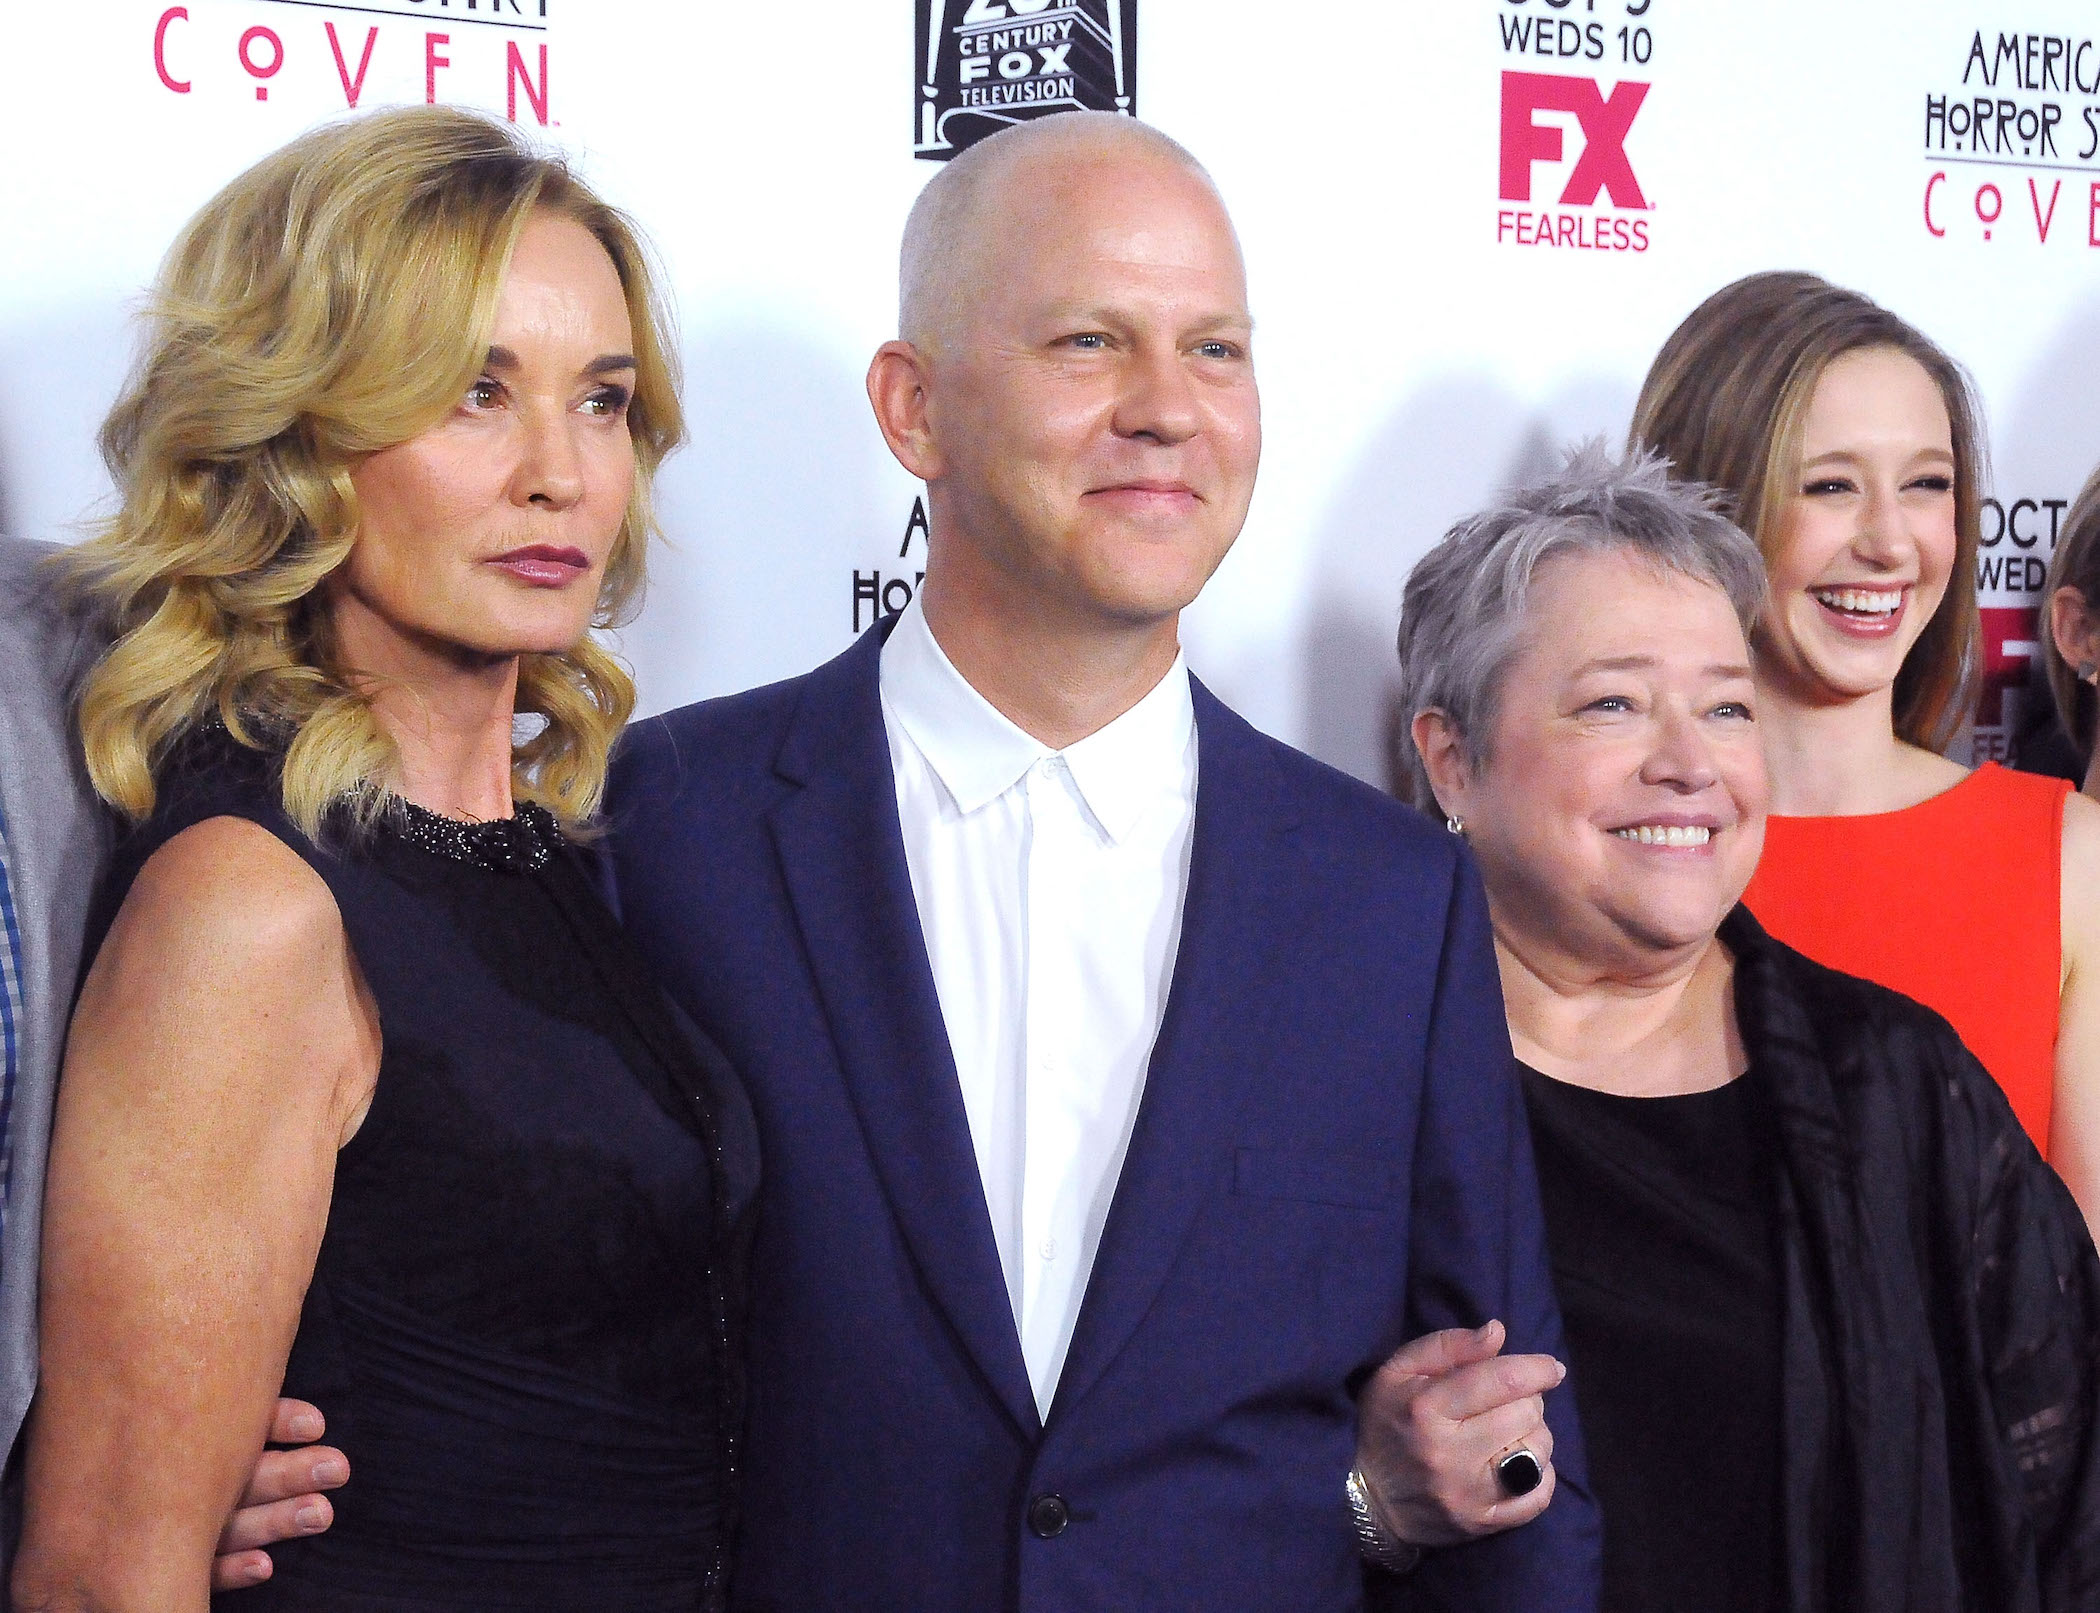 'American Horror Story' Season 10 creator Ryan Murphy at an event for the show with Jessica Lange, Kathy Bates, and Taissa Farmiga